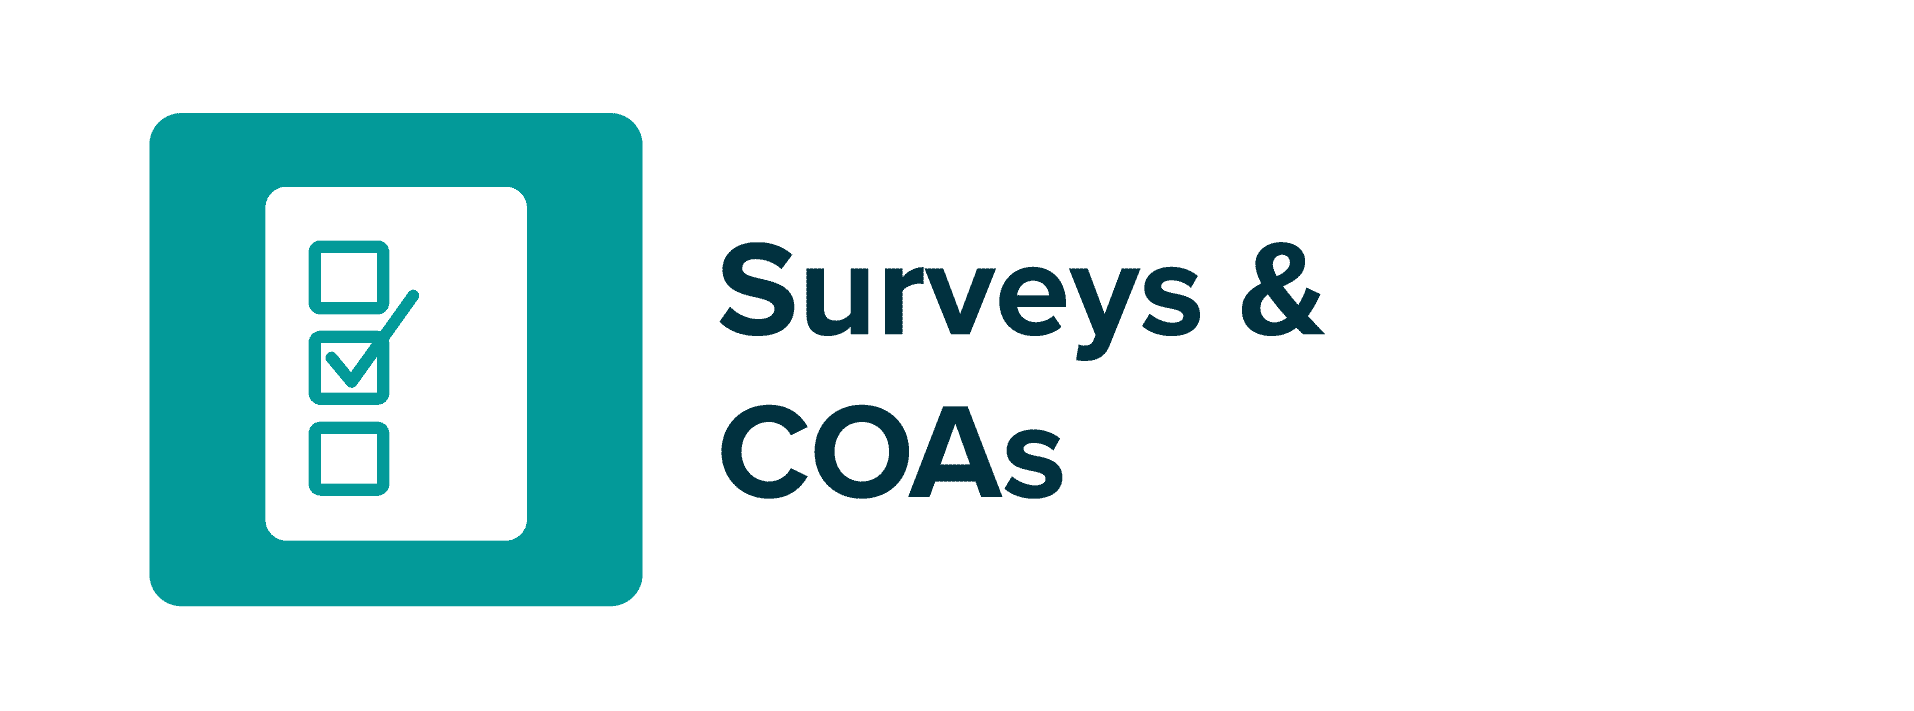 Surveys and COAs - clinical outcome assessments